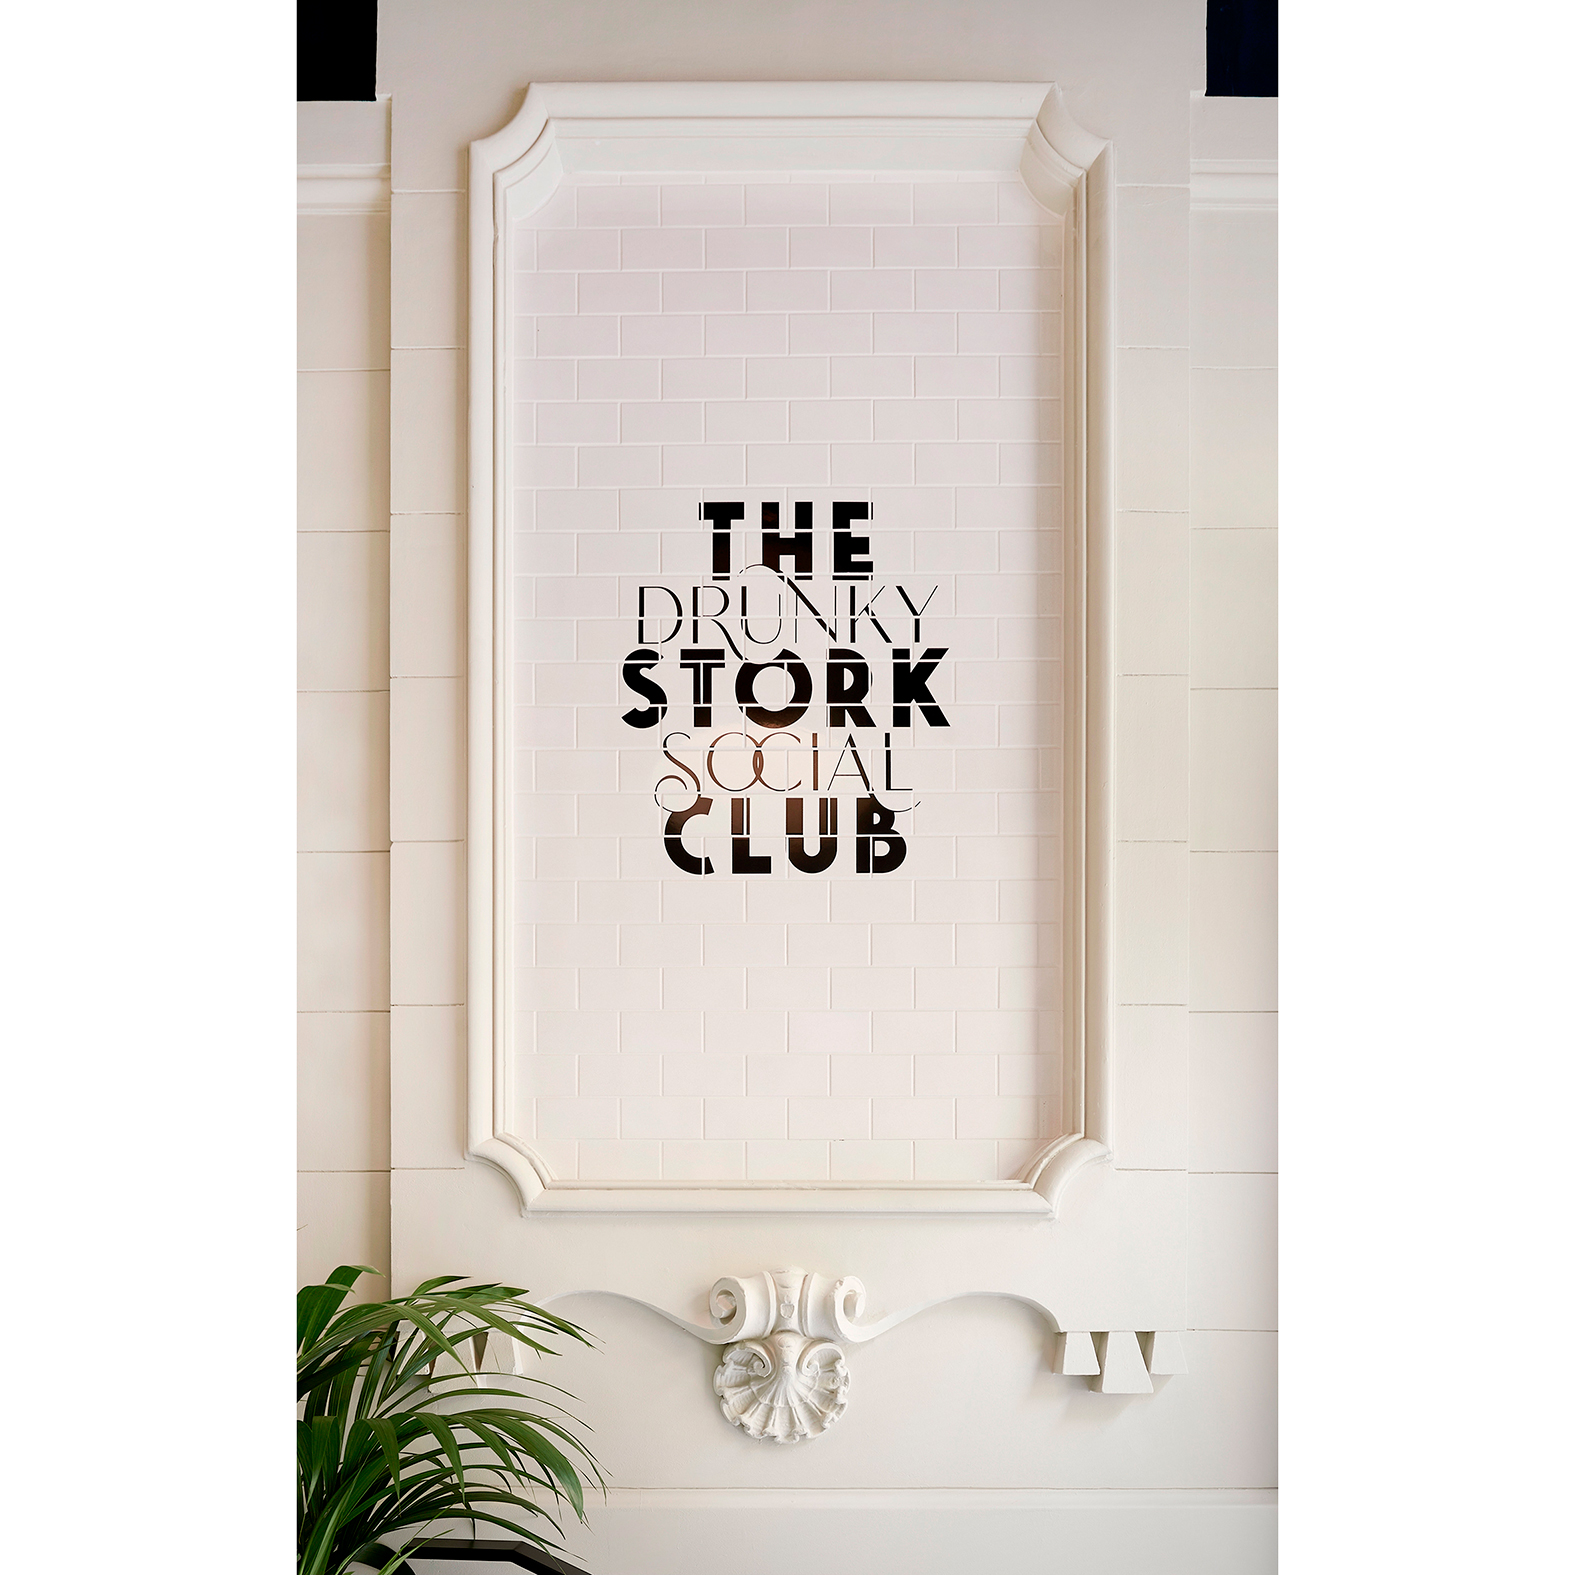 The Drunky Stork Social Club